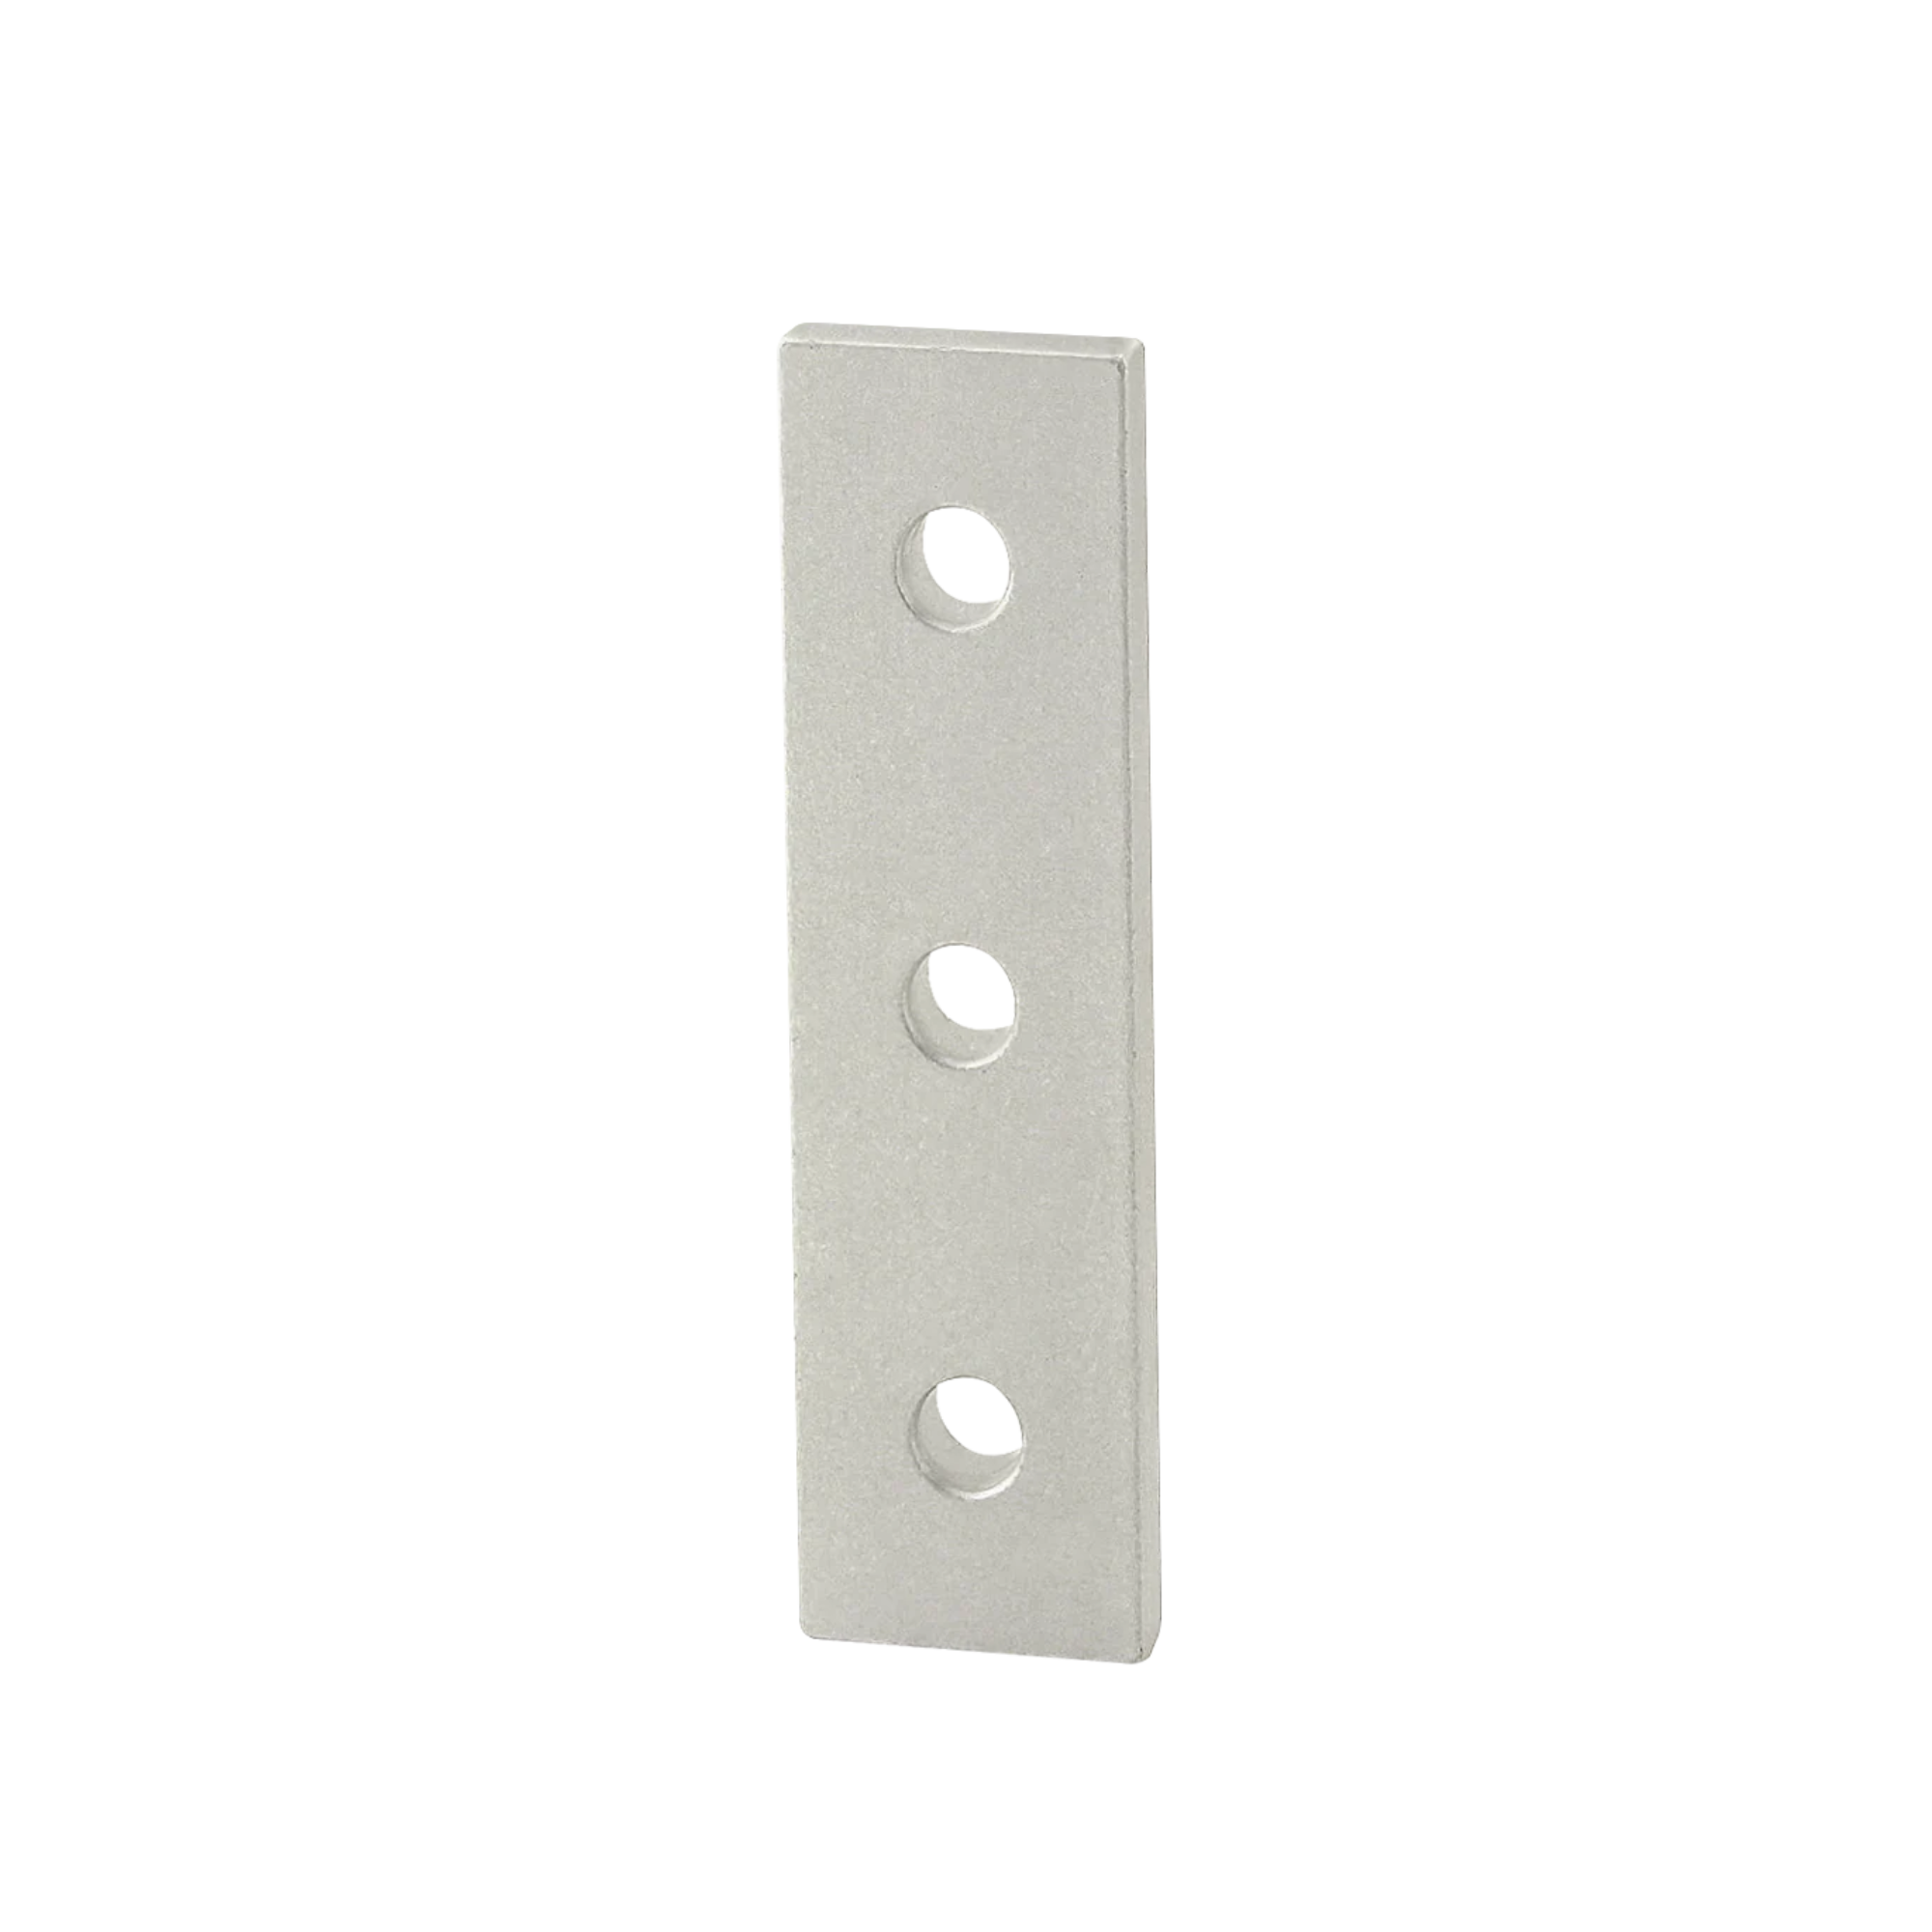 narrow, upright, white, rectangular plate with three holes